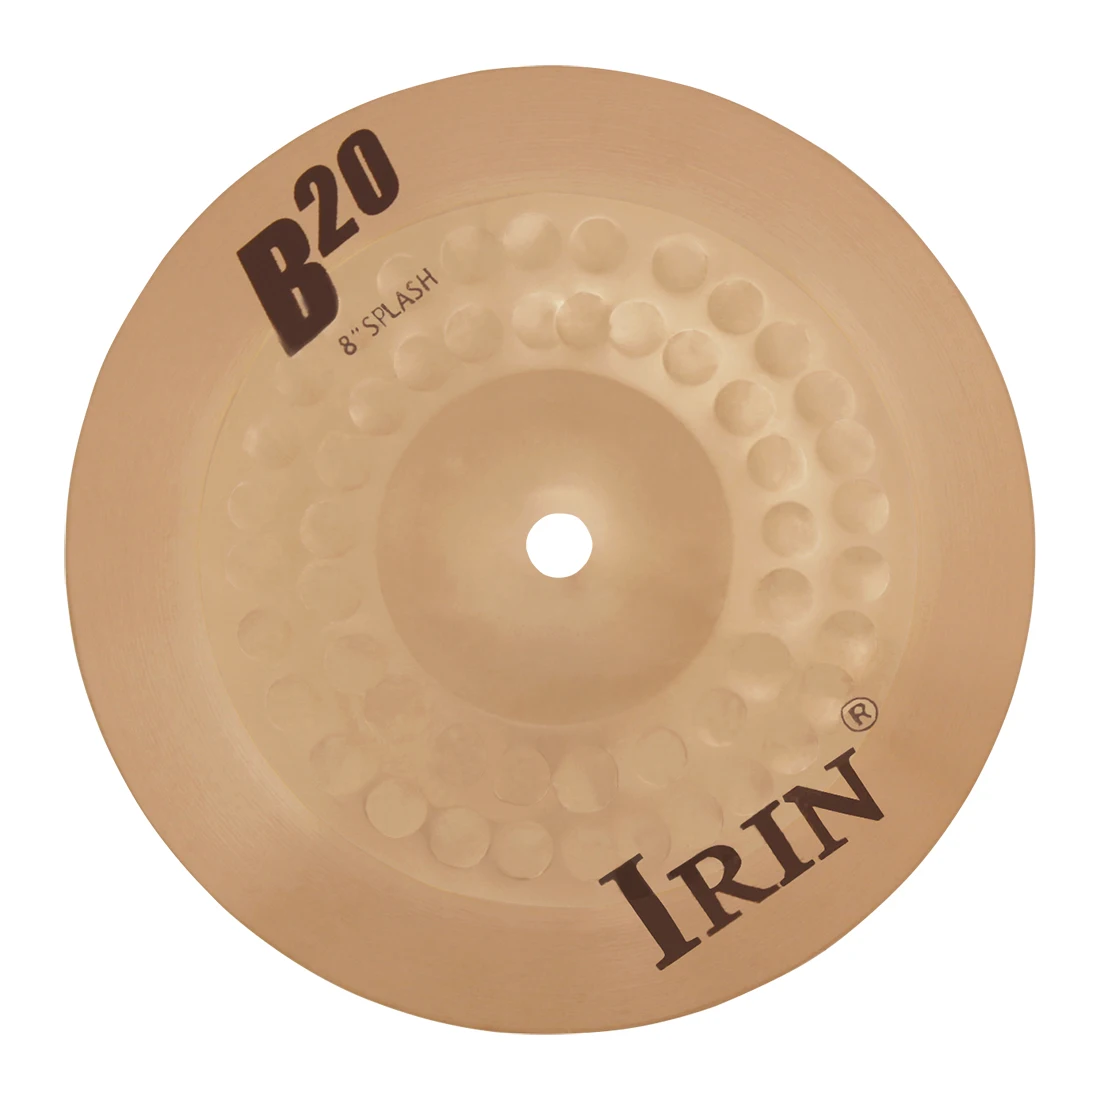 

IRIN 8 Inch B20 Cymbal Gong Phosphor Bronze Cymbals Percussion Instruments Parts Accessories Crash Hi-Hat Drum Cymbals Kit